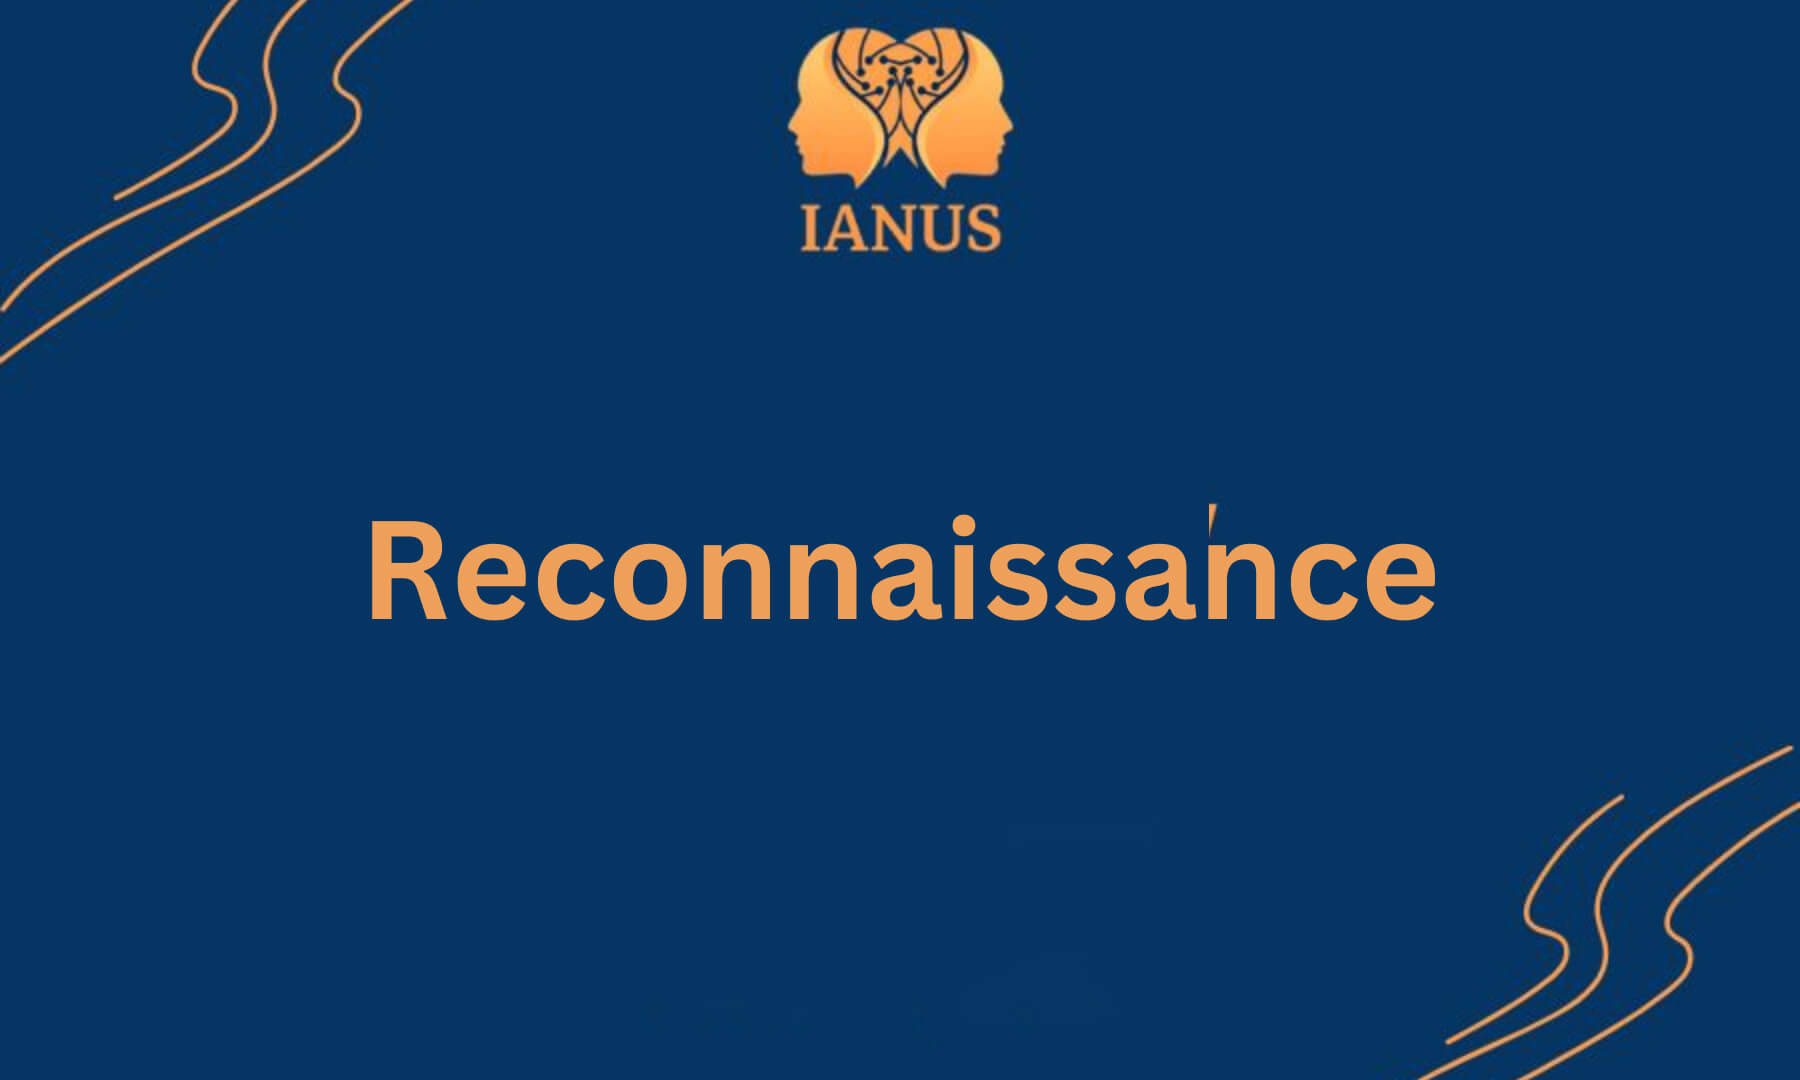 IANUS studied “Reconnaissance”